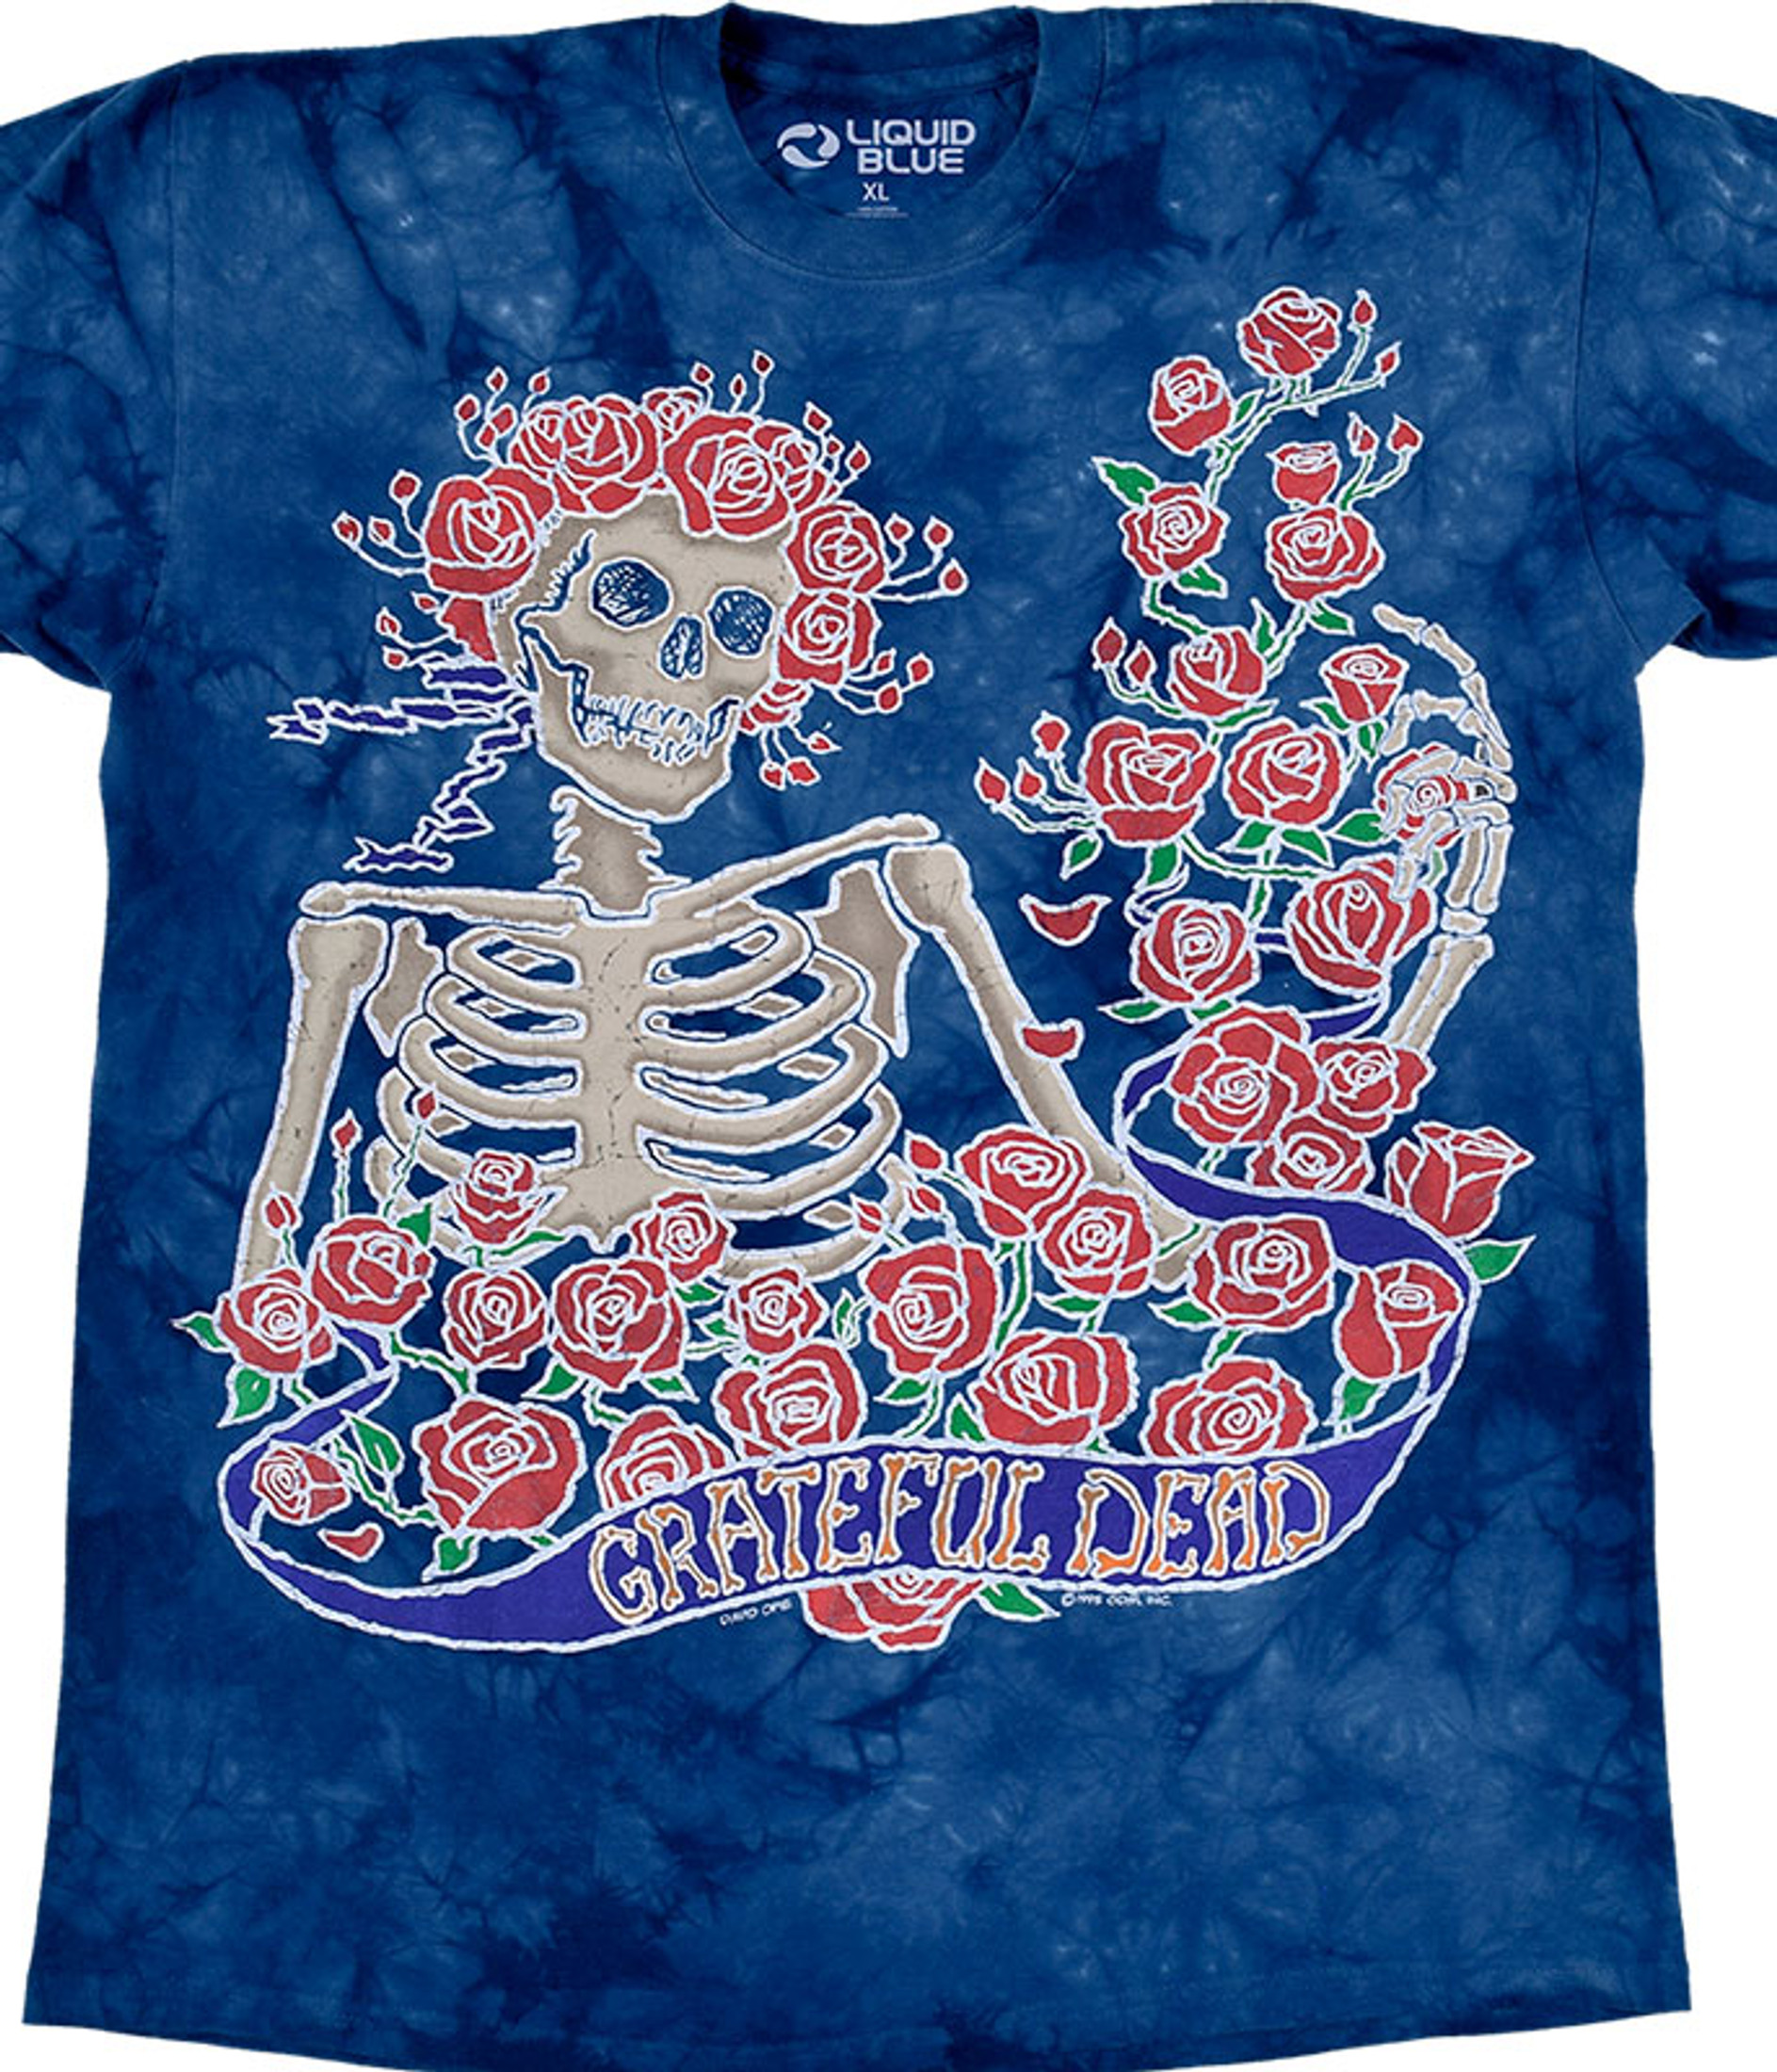 Vintage 90s Grateful Dead Spiral Bears Shirt Liquid Blue Rock Band